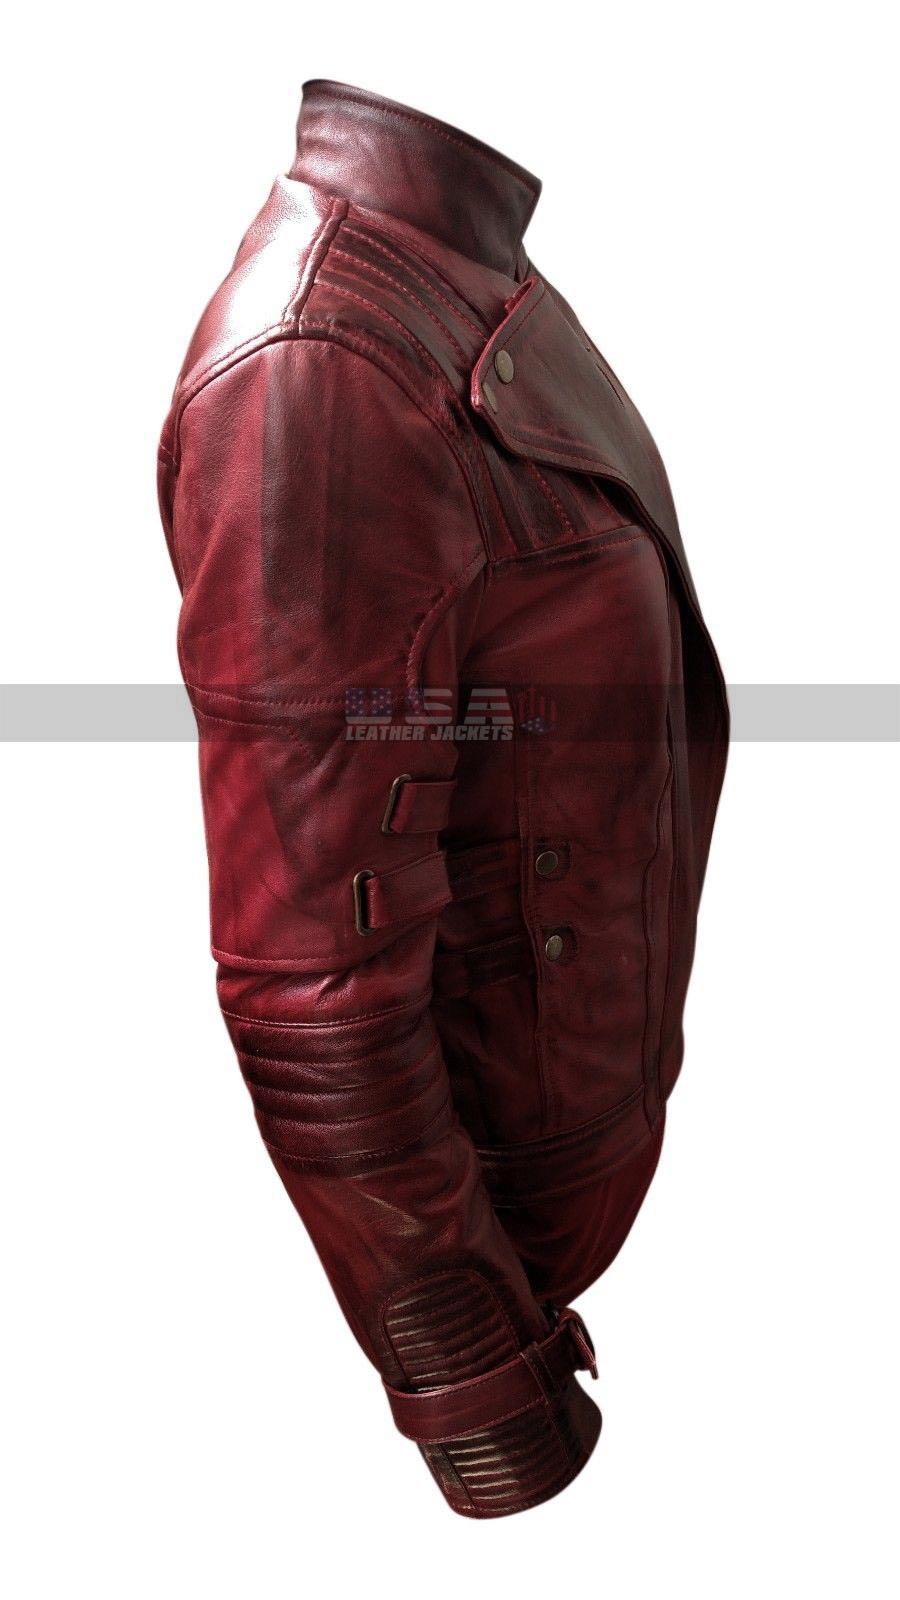 Star Lord Guardian Of Galaxy Vol. 2 Chris Pratt Women Leather Jacket